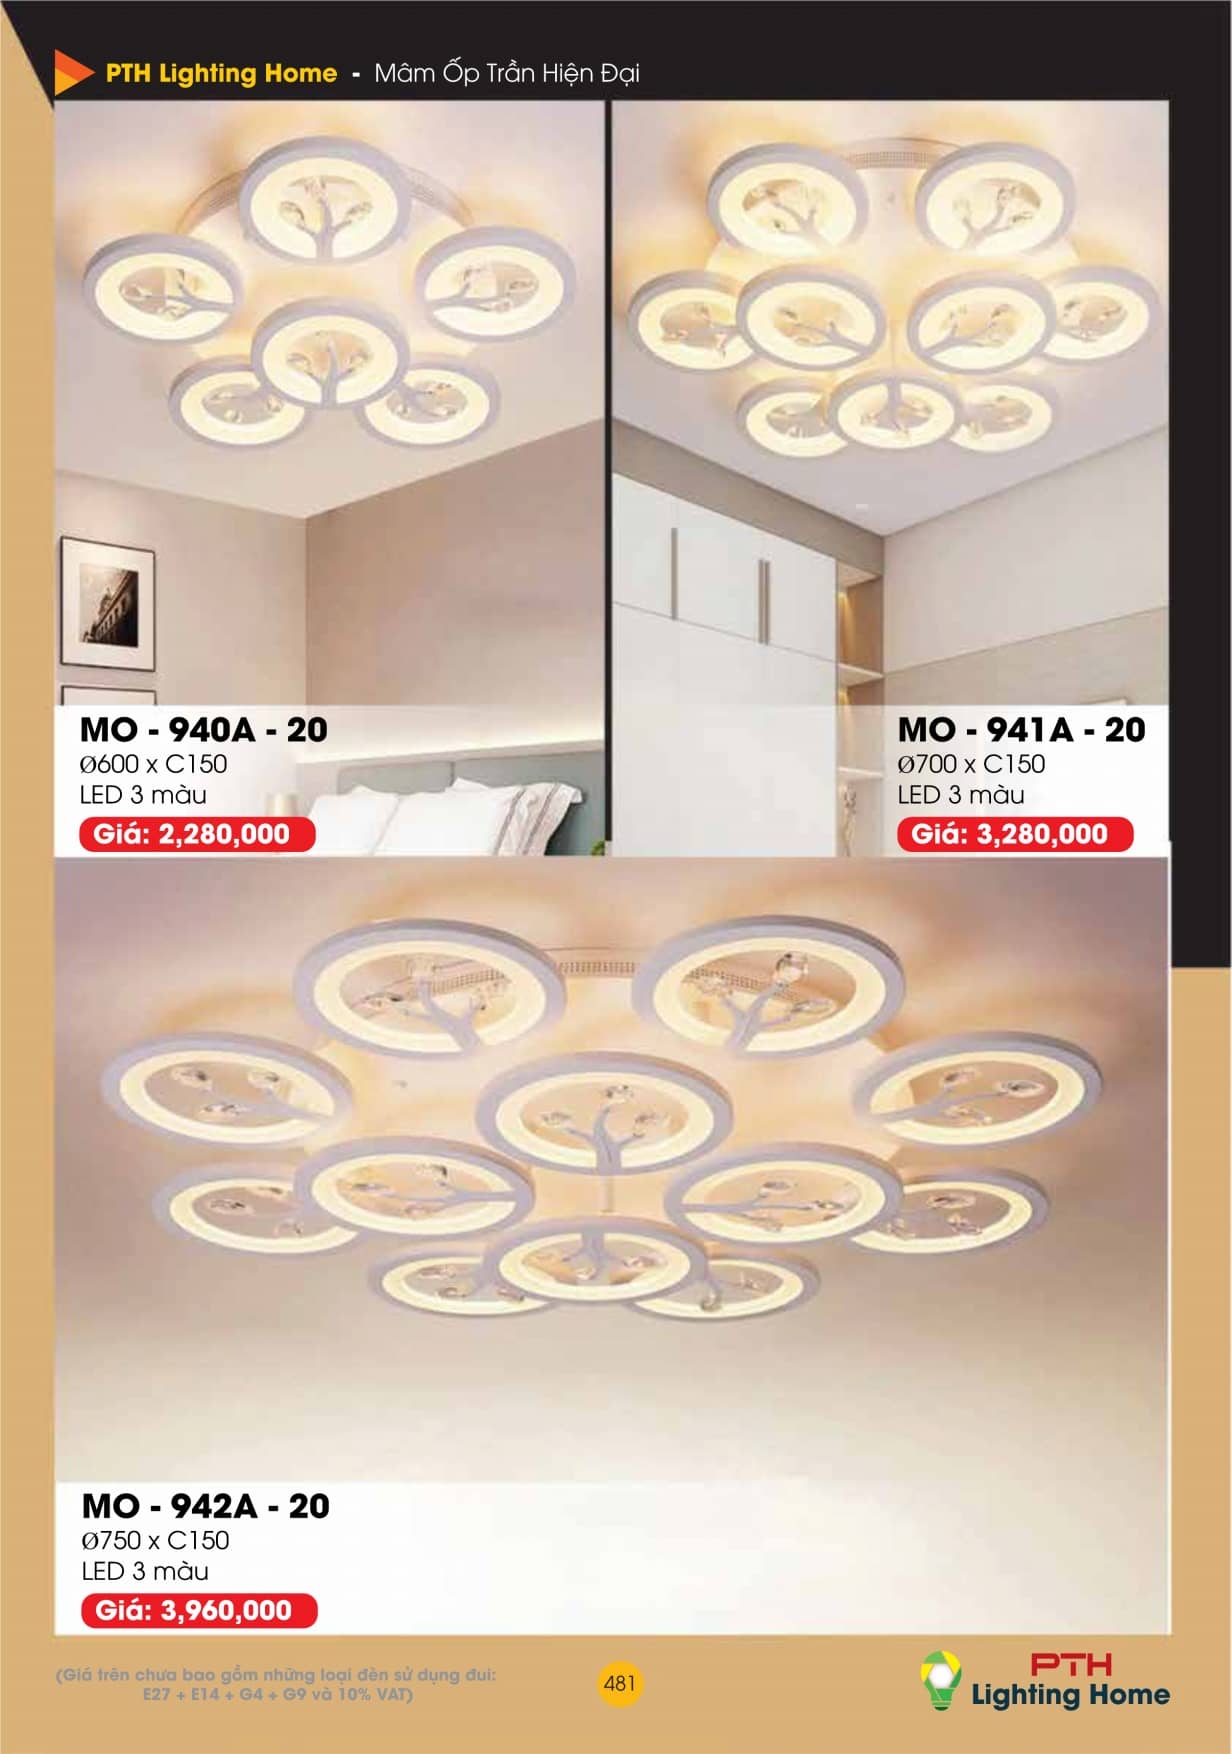 catalogue-bang-gia-den-led-trang-tri-pth-lighting-home-483